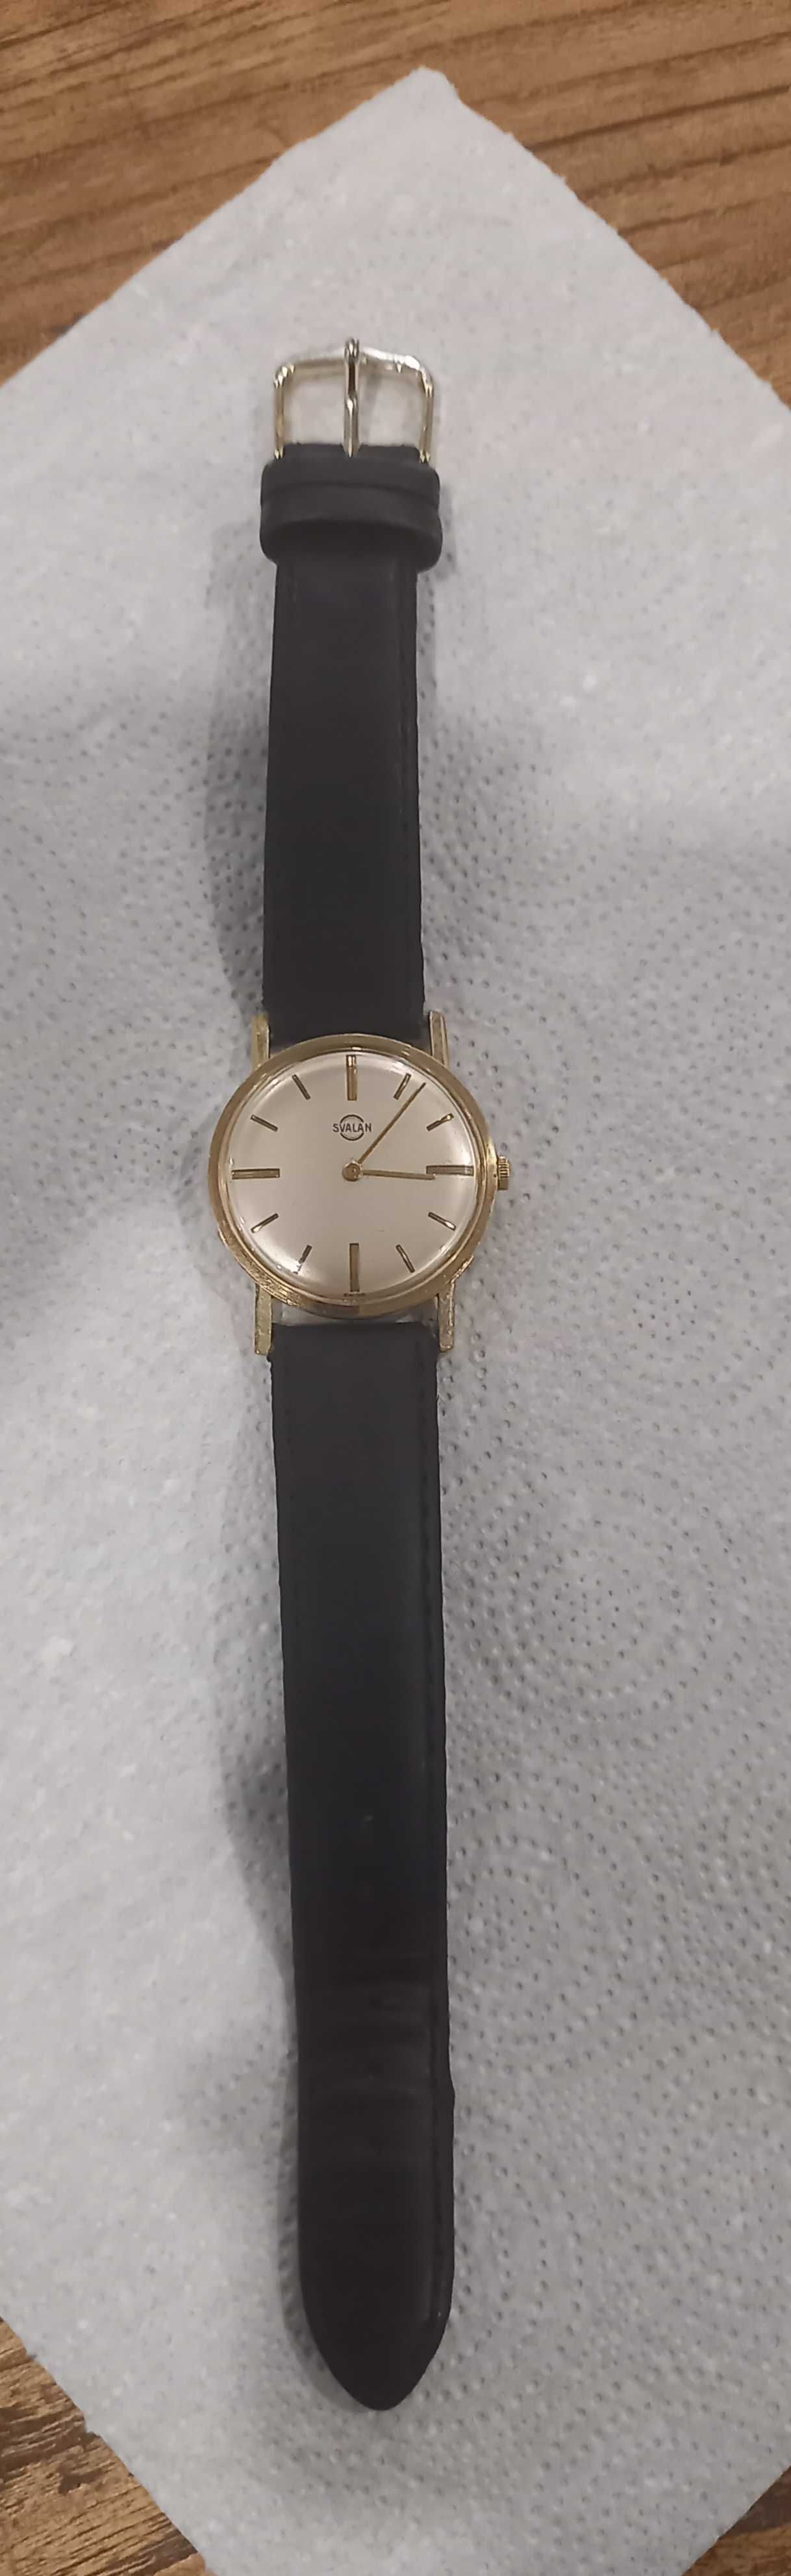 Złoty zegarek Svalan 14k